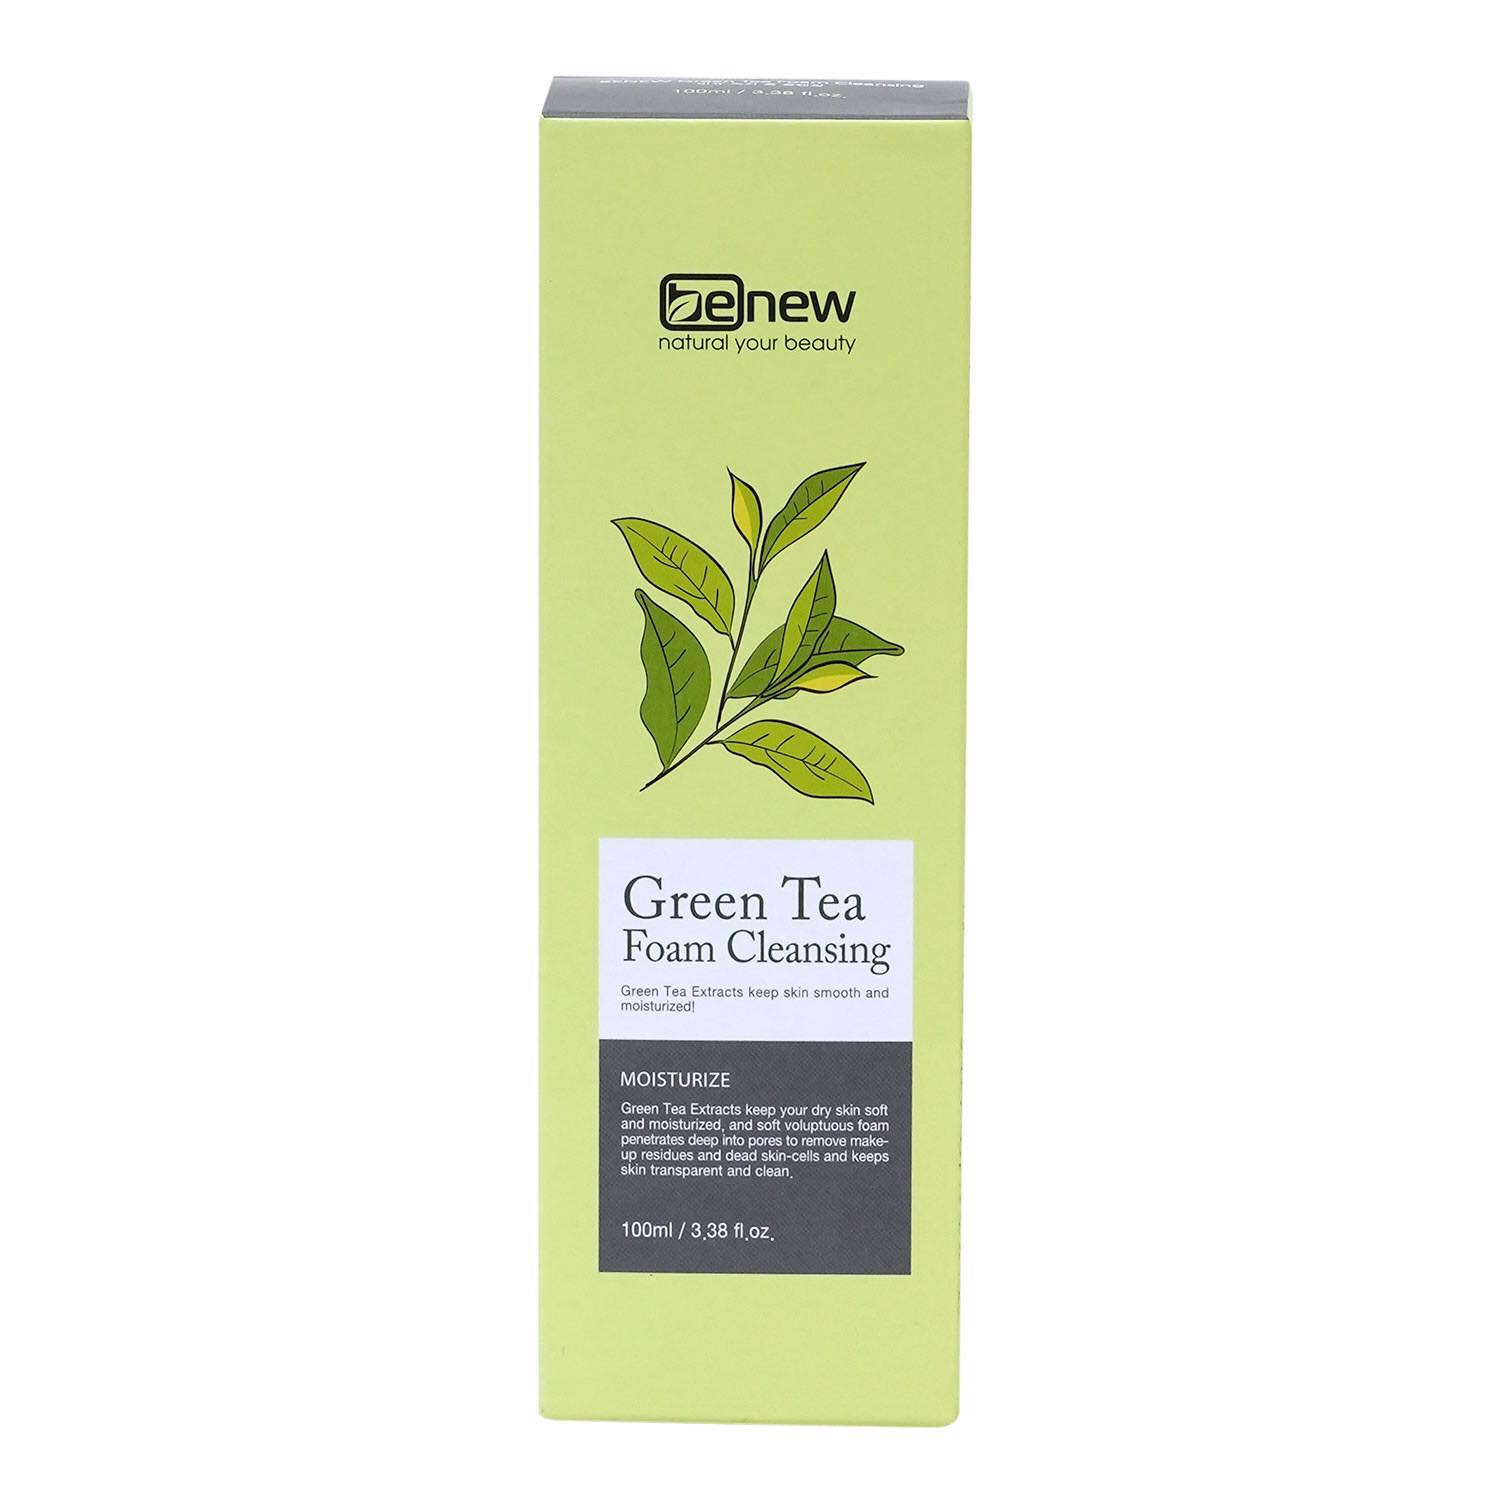 [HCM]Sữa rửa mặt trà xanh Benew Green Tea Foam Cleansing 100ml